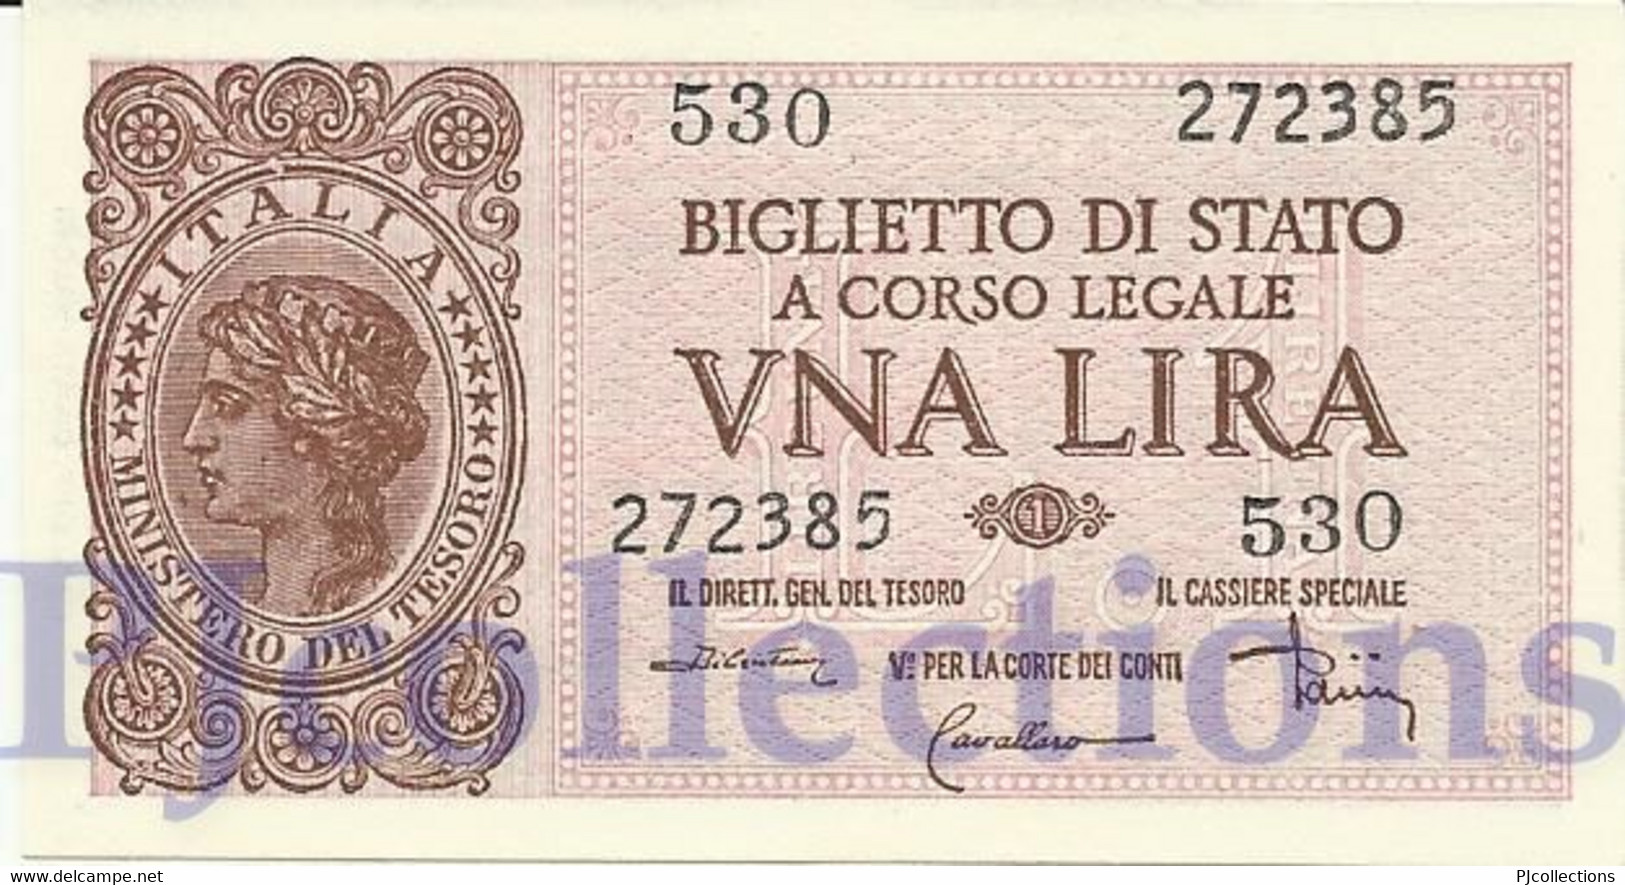 ITALY 1 LIRA 1944 PICK 29c UNC - Italia – 1 Lira